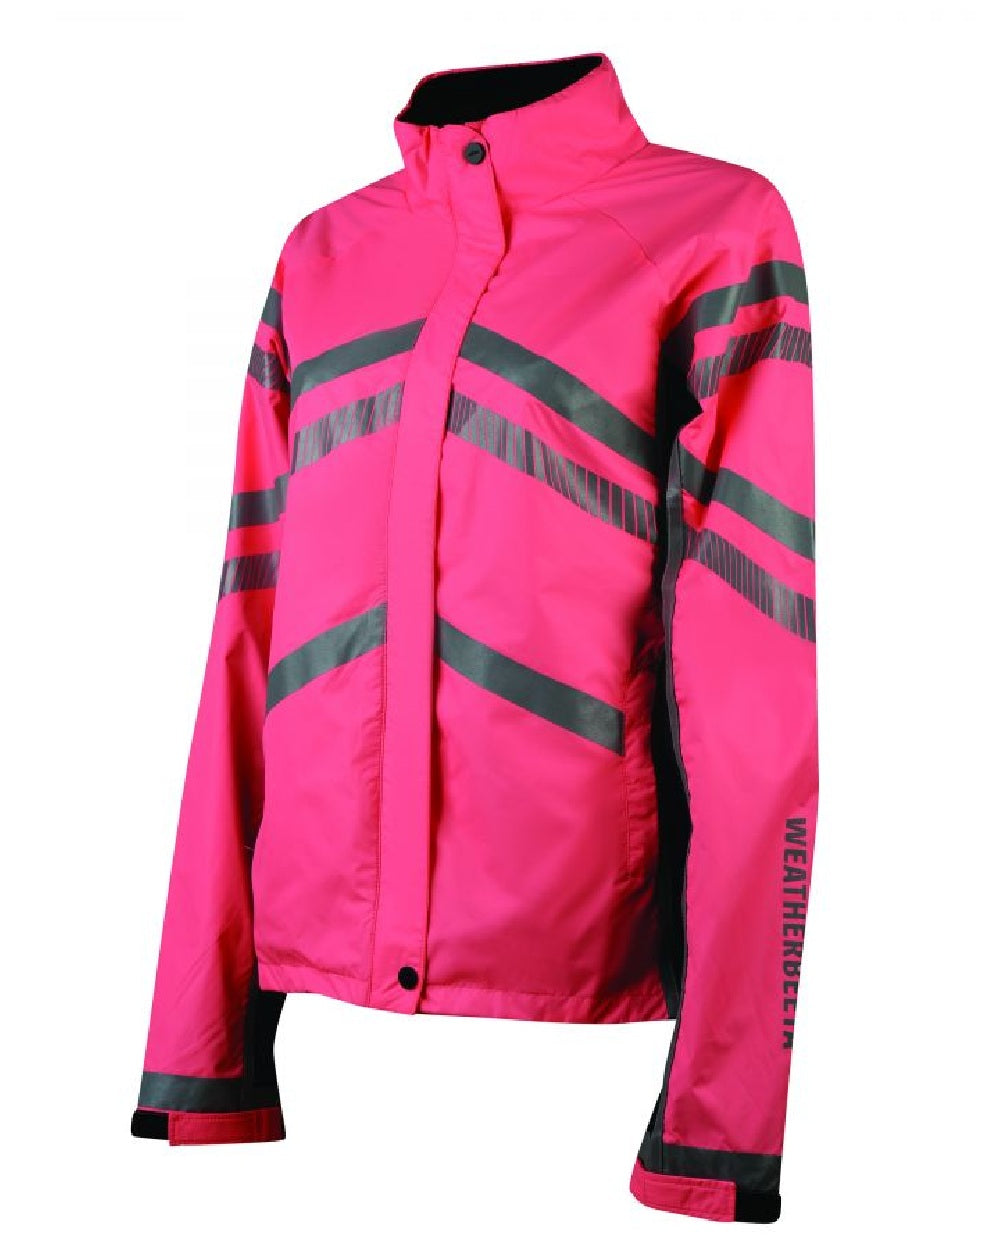 WeatherBeeta Reflective Lightweight Waterproof Jacket in Hi Vis Pink 